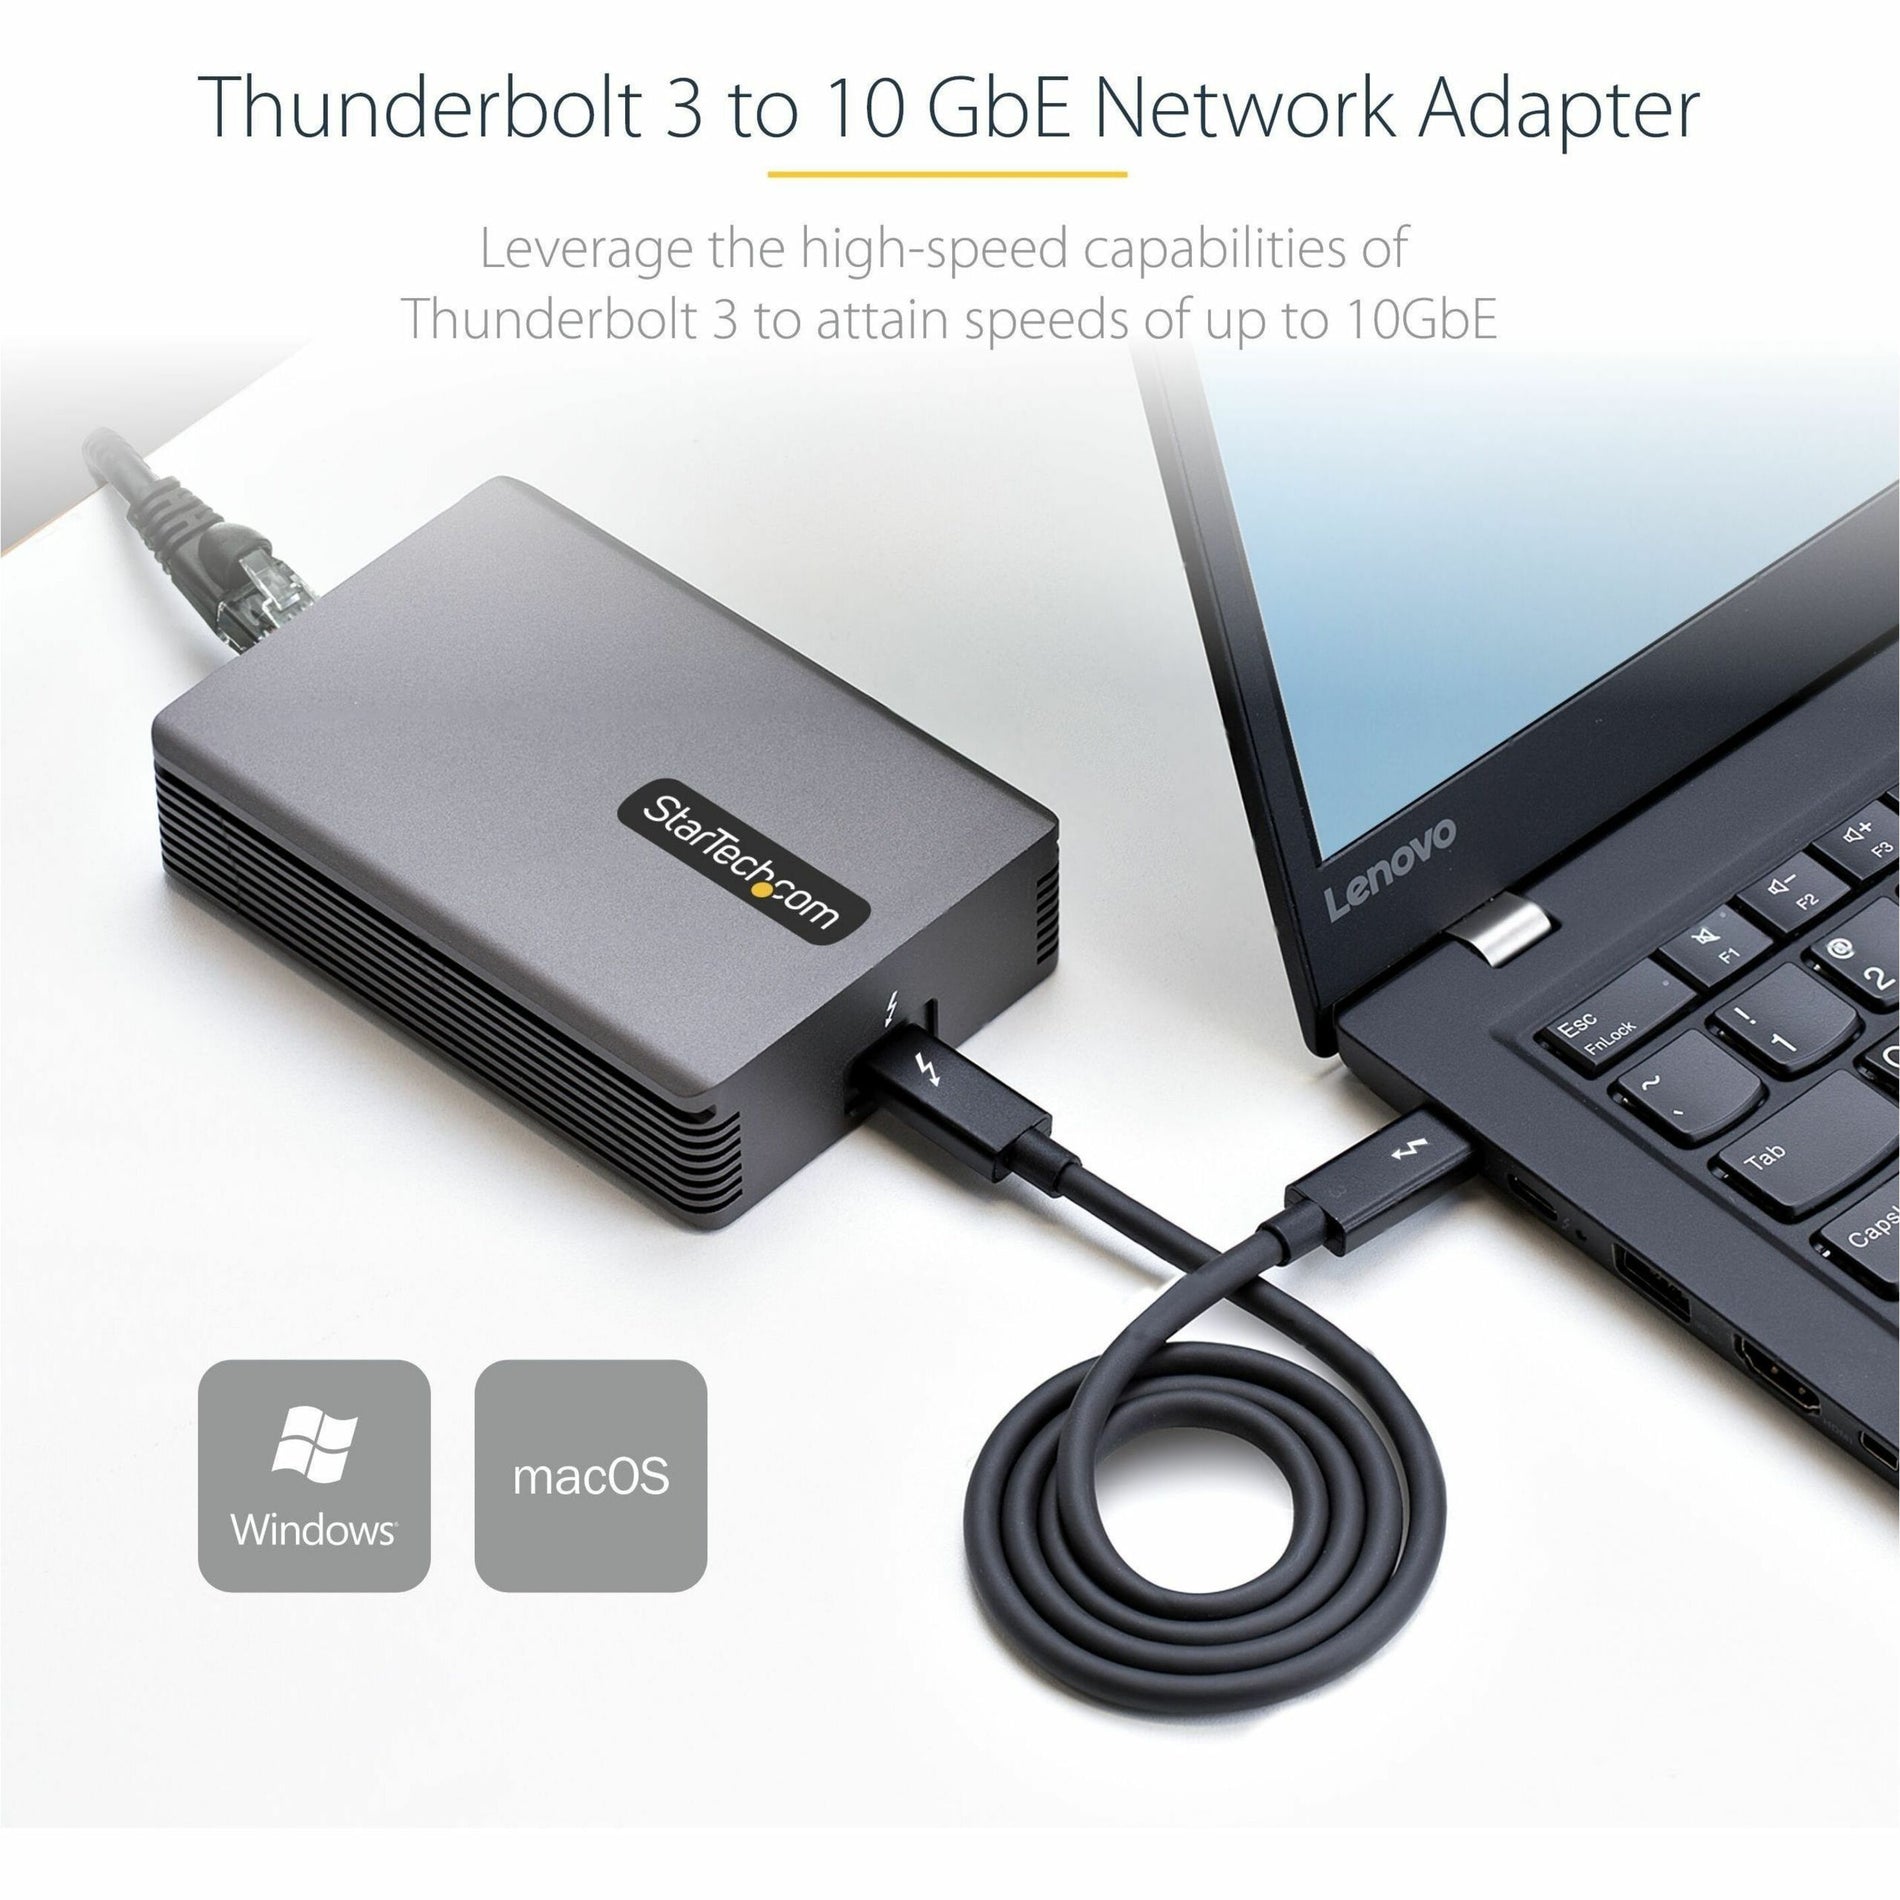 StarTech.com TB310G2 Thunderbolt 3 to Ethernet Adapter, 10GbE, Multi-Gigabit RJ45 Network Adapter